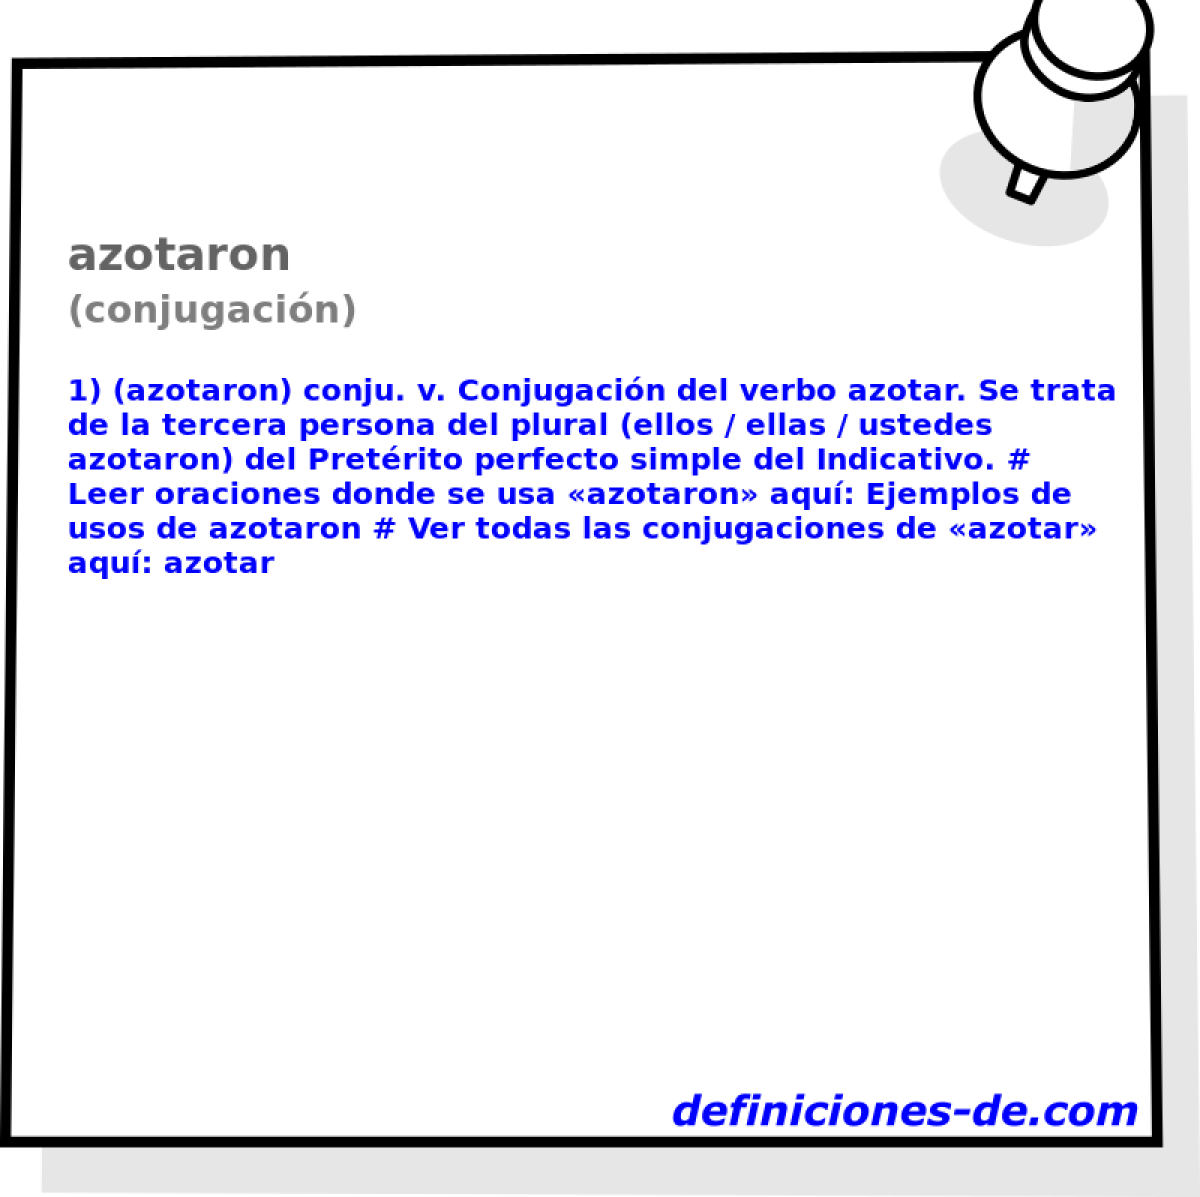 azotaron (conjugacin)